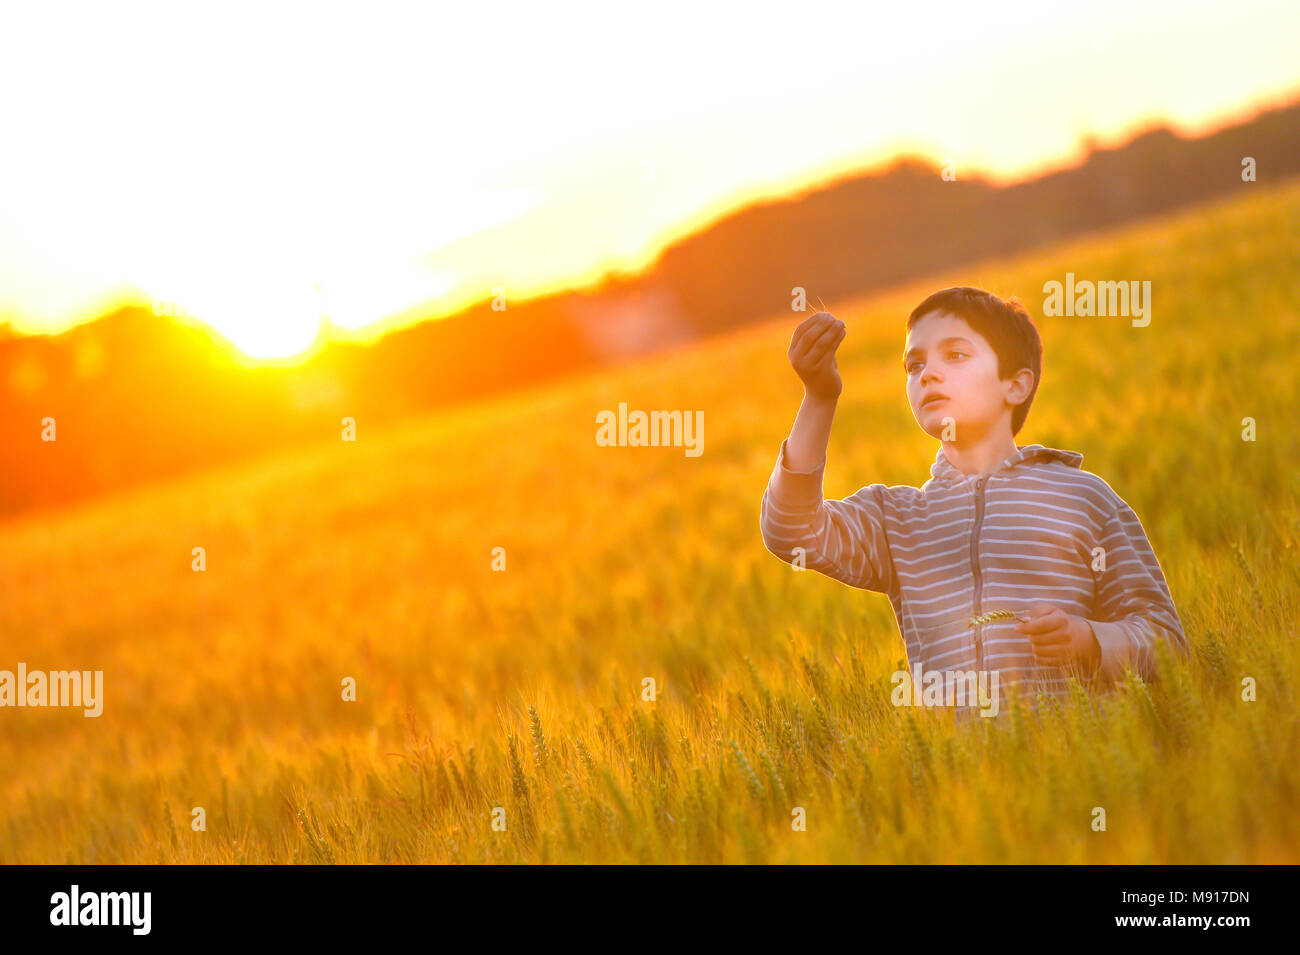 Little boy through a wheat field at sunset Stock Photo